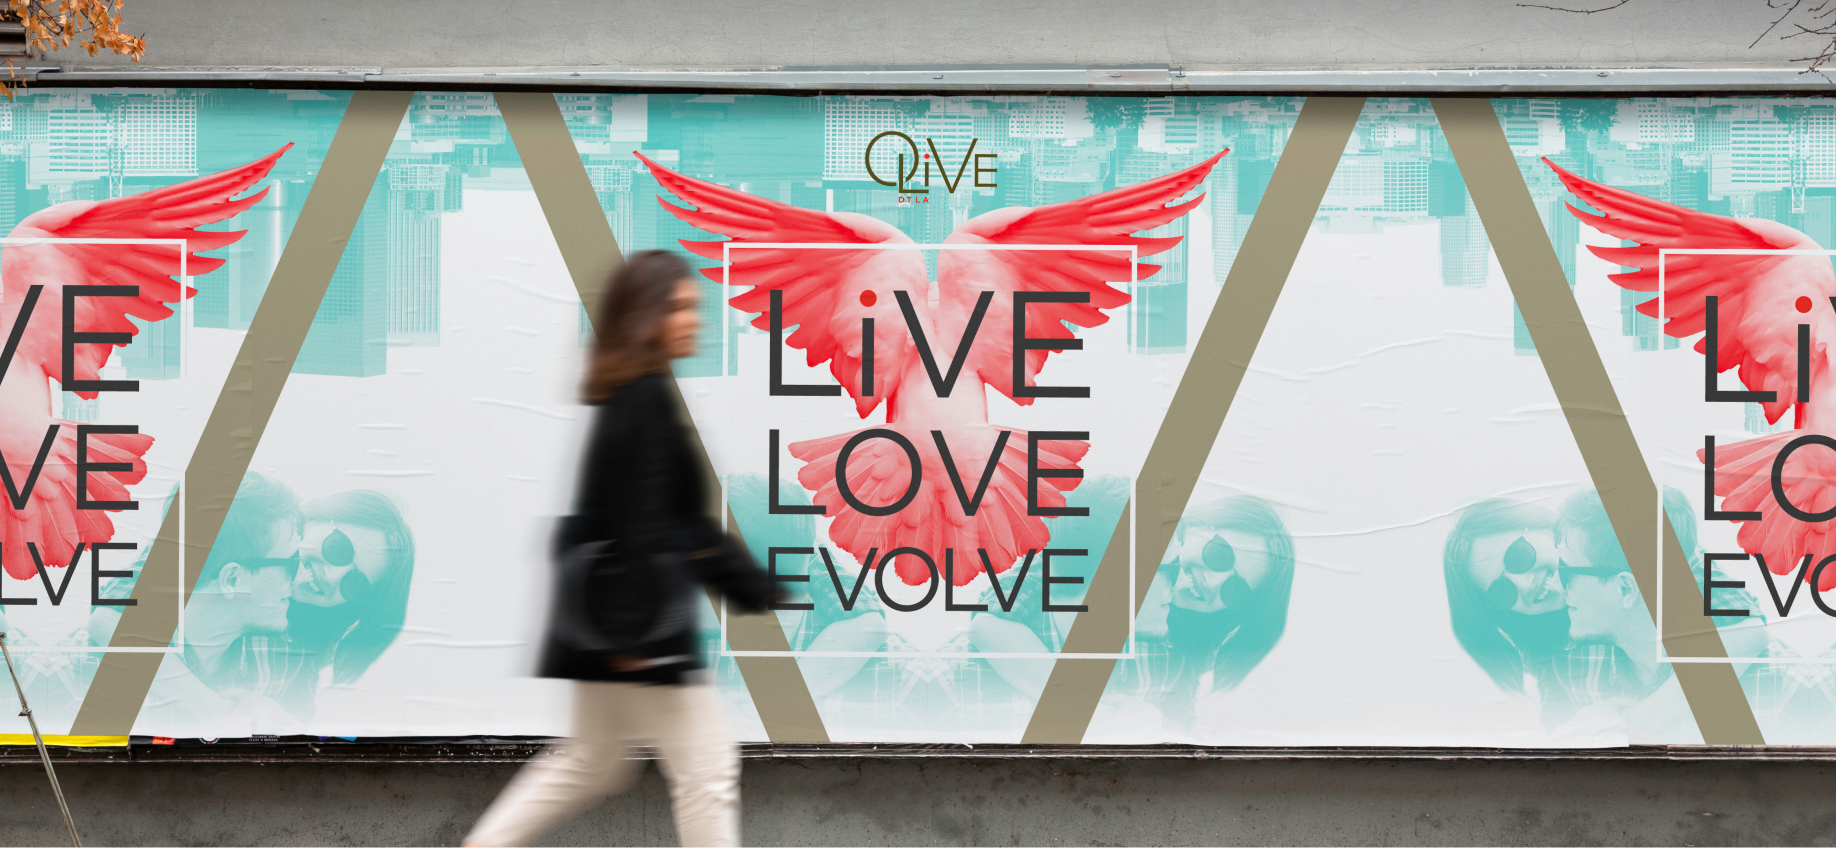 Authentic Brand Storytelling: Olive DTLA Billboard